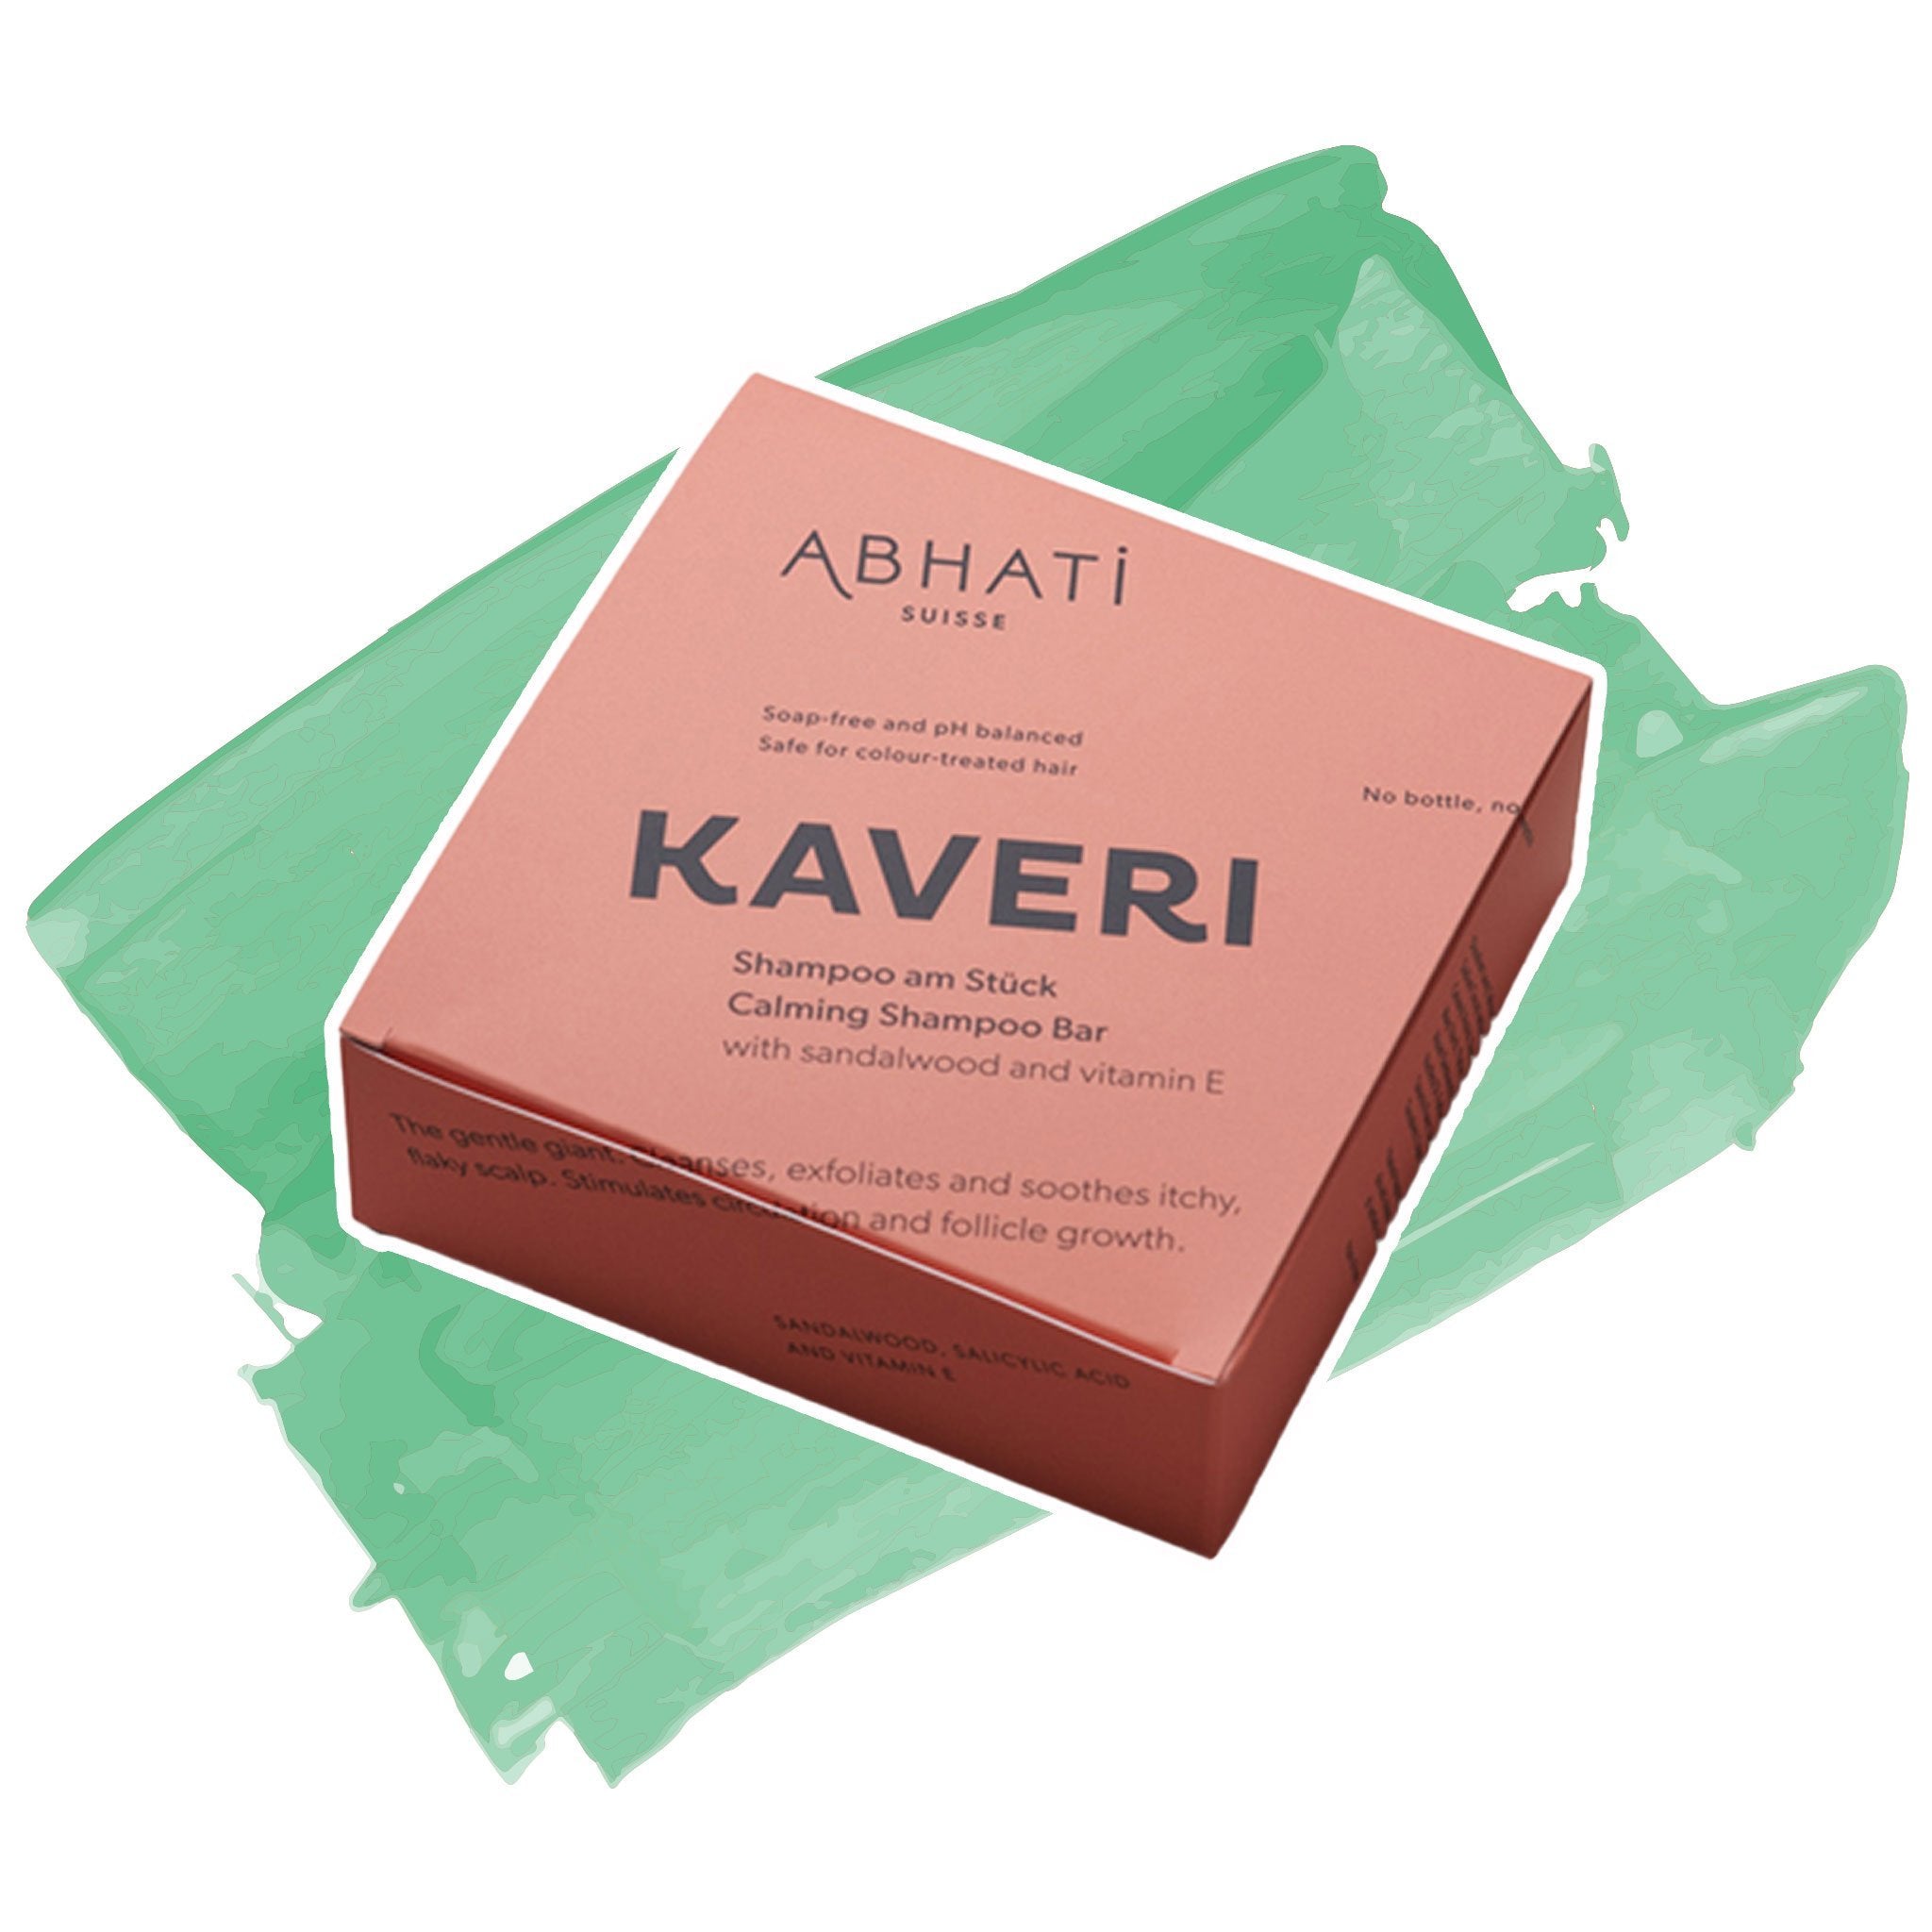 Abhati Suisse | Kaveri Calming Shampoo am Stück - lockenkopf